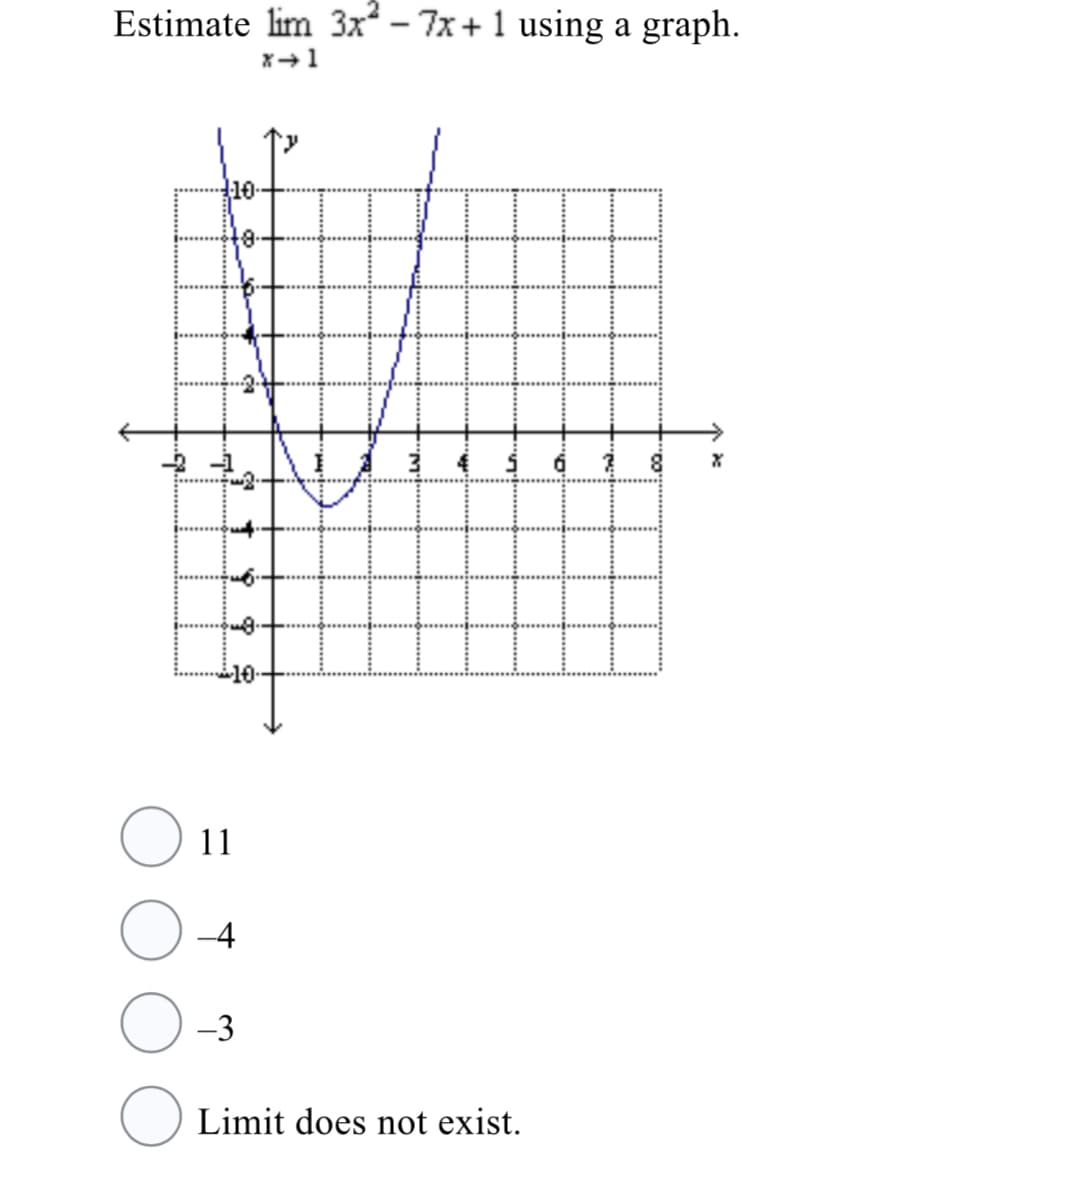 Estimate lim 3x - 7x+1 using a graph.
10-
11
-4
-3
Limit does not exist.
